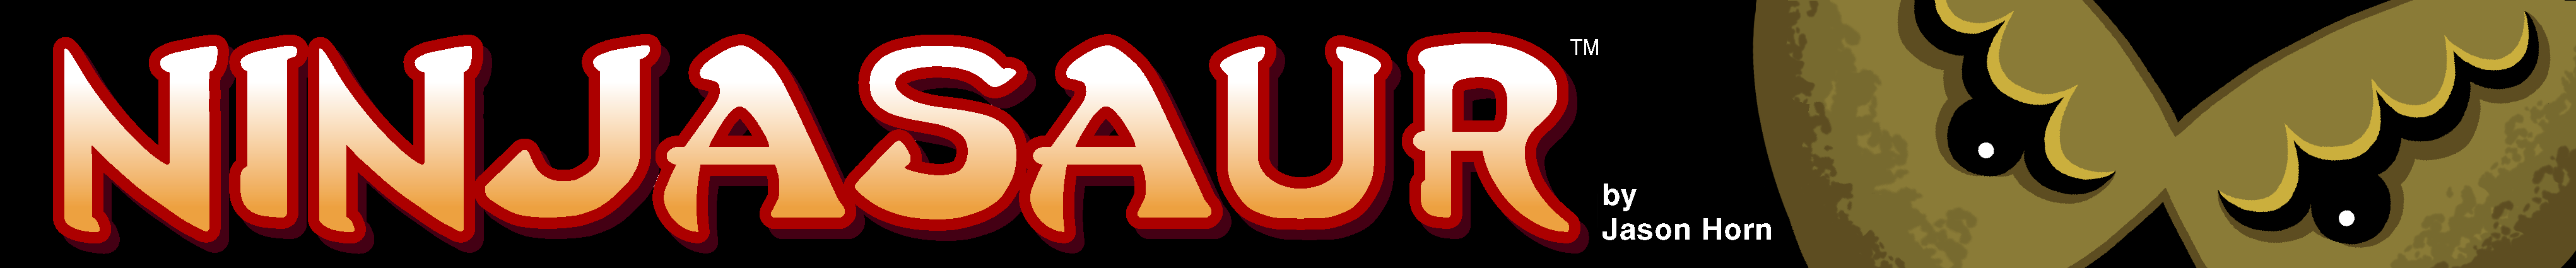 Ninjasaur logo